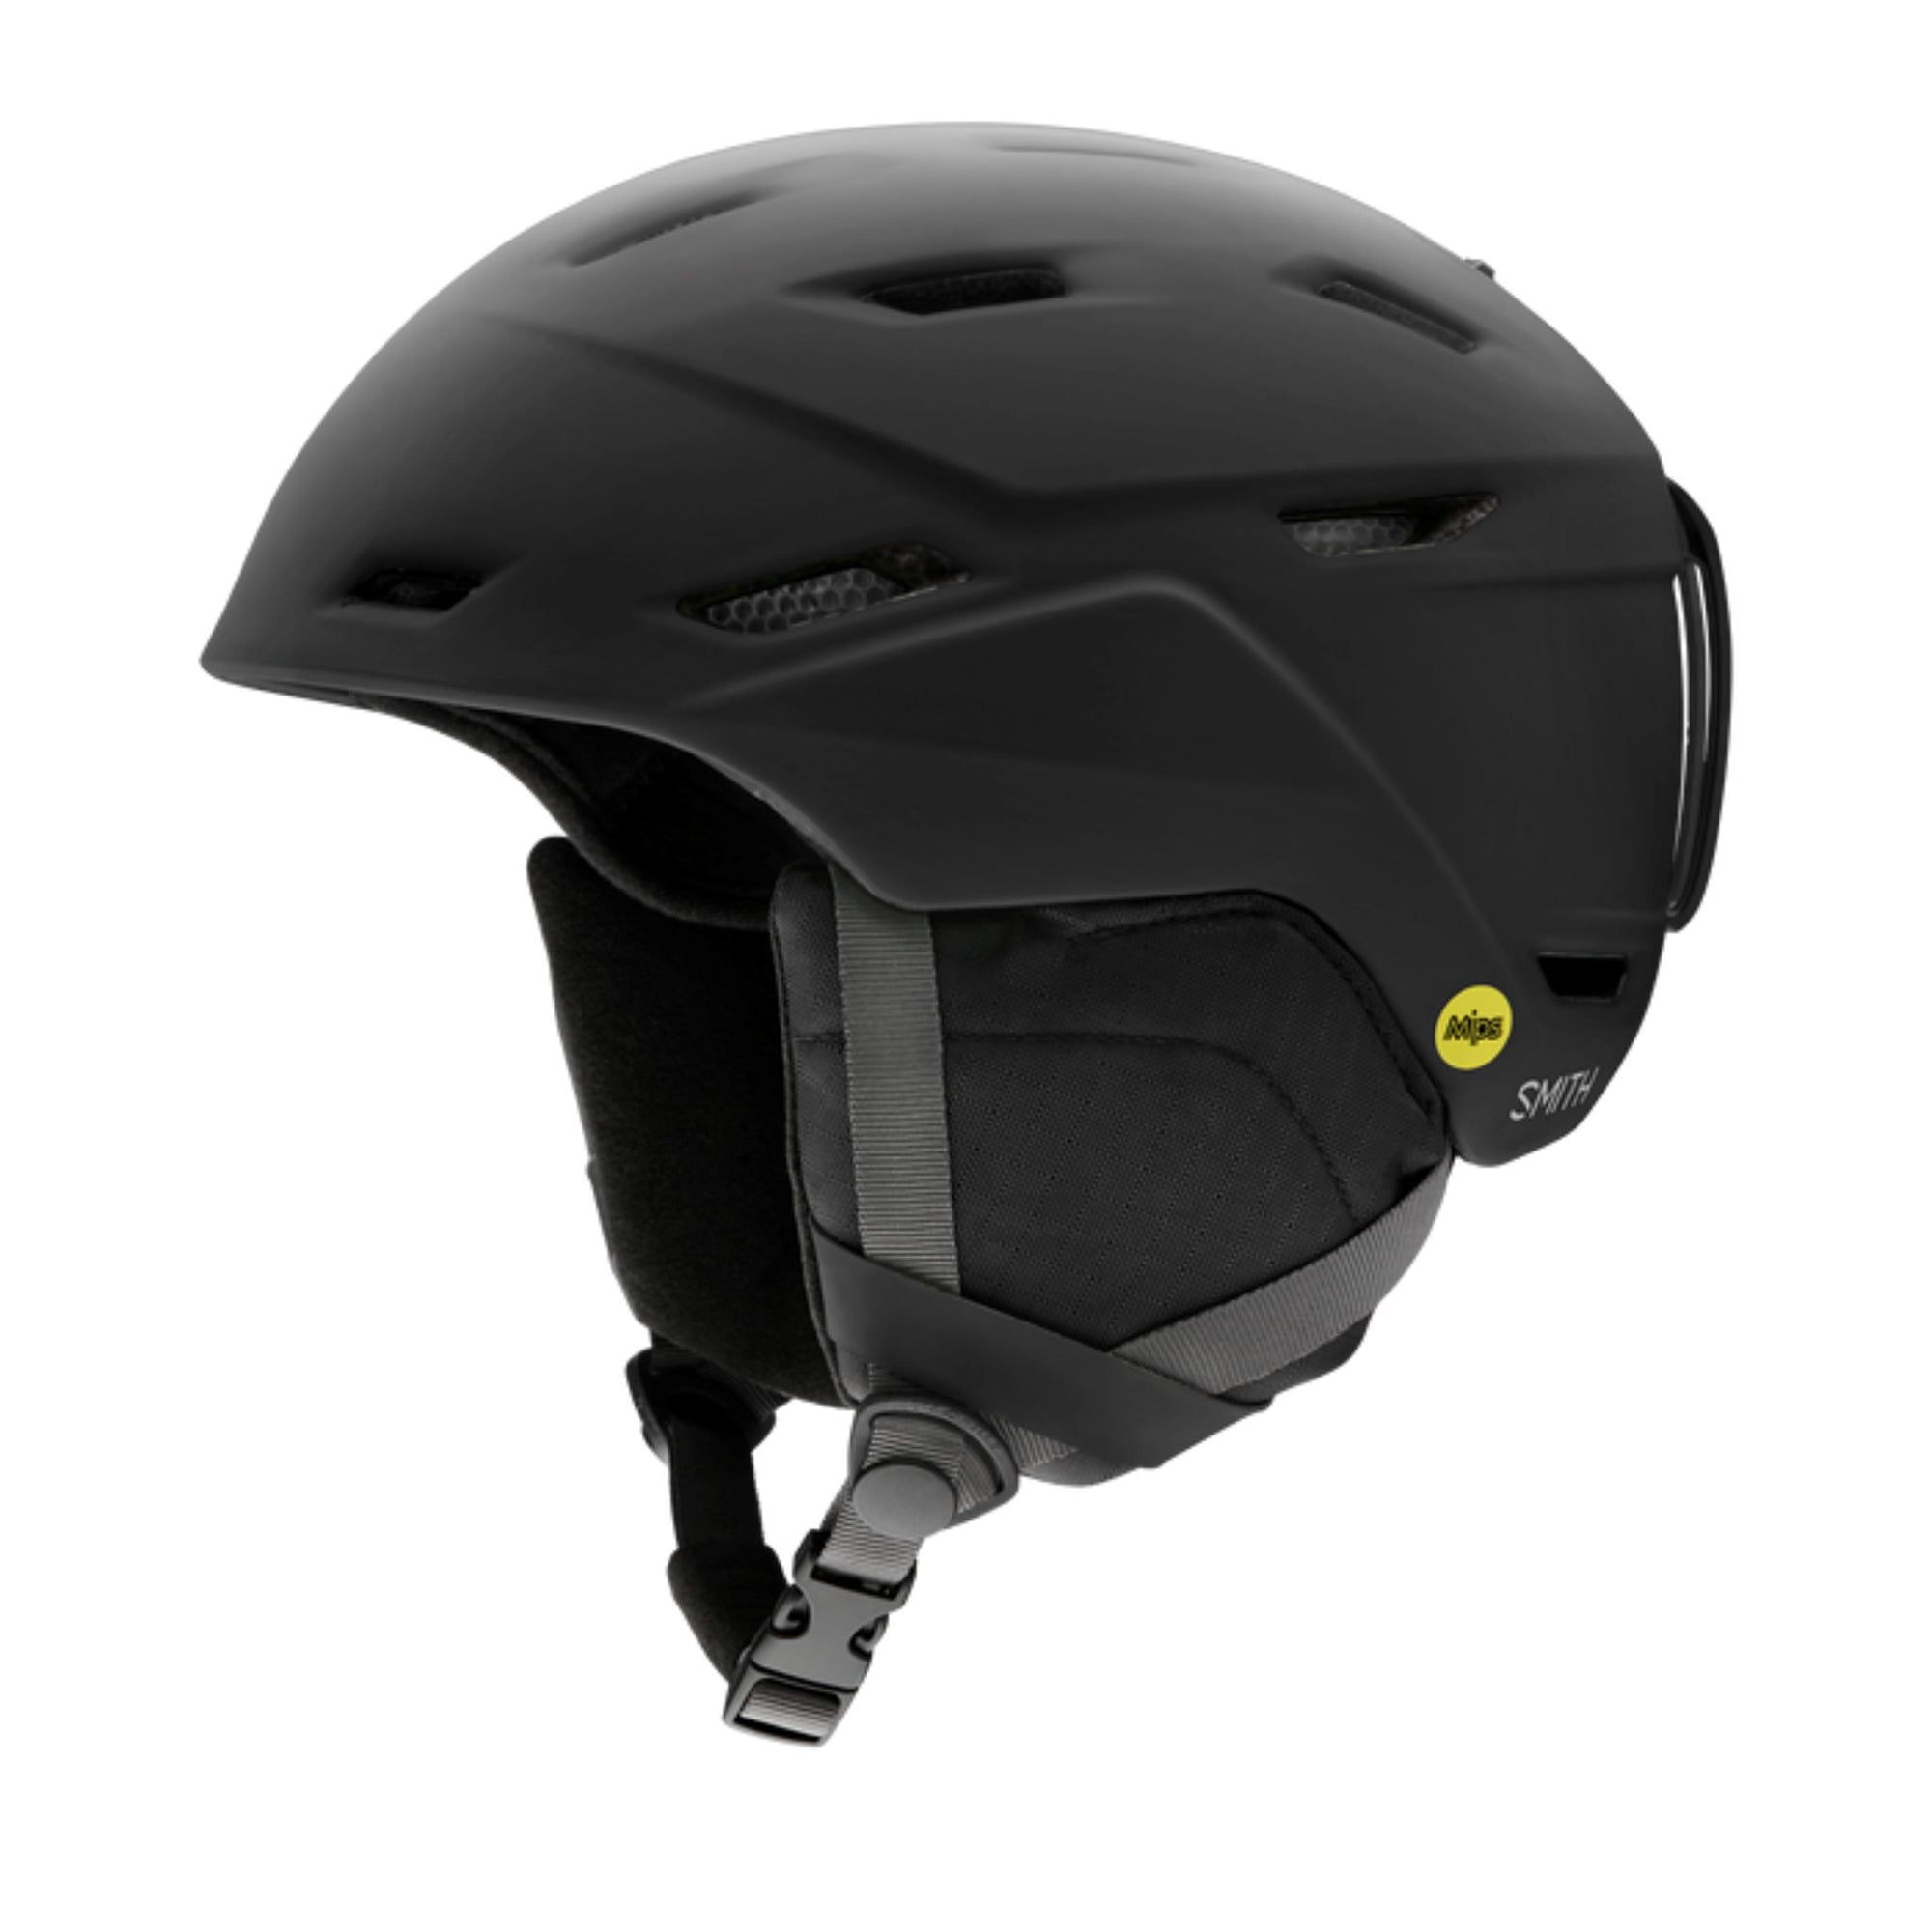 Mens Smith Mission MIPS Helmet - Matte Black Helmets Smith M - (55-59cm) 